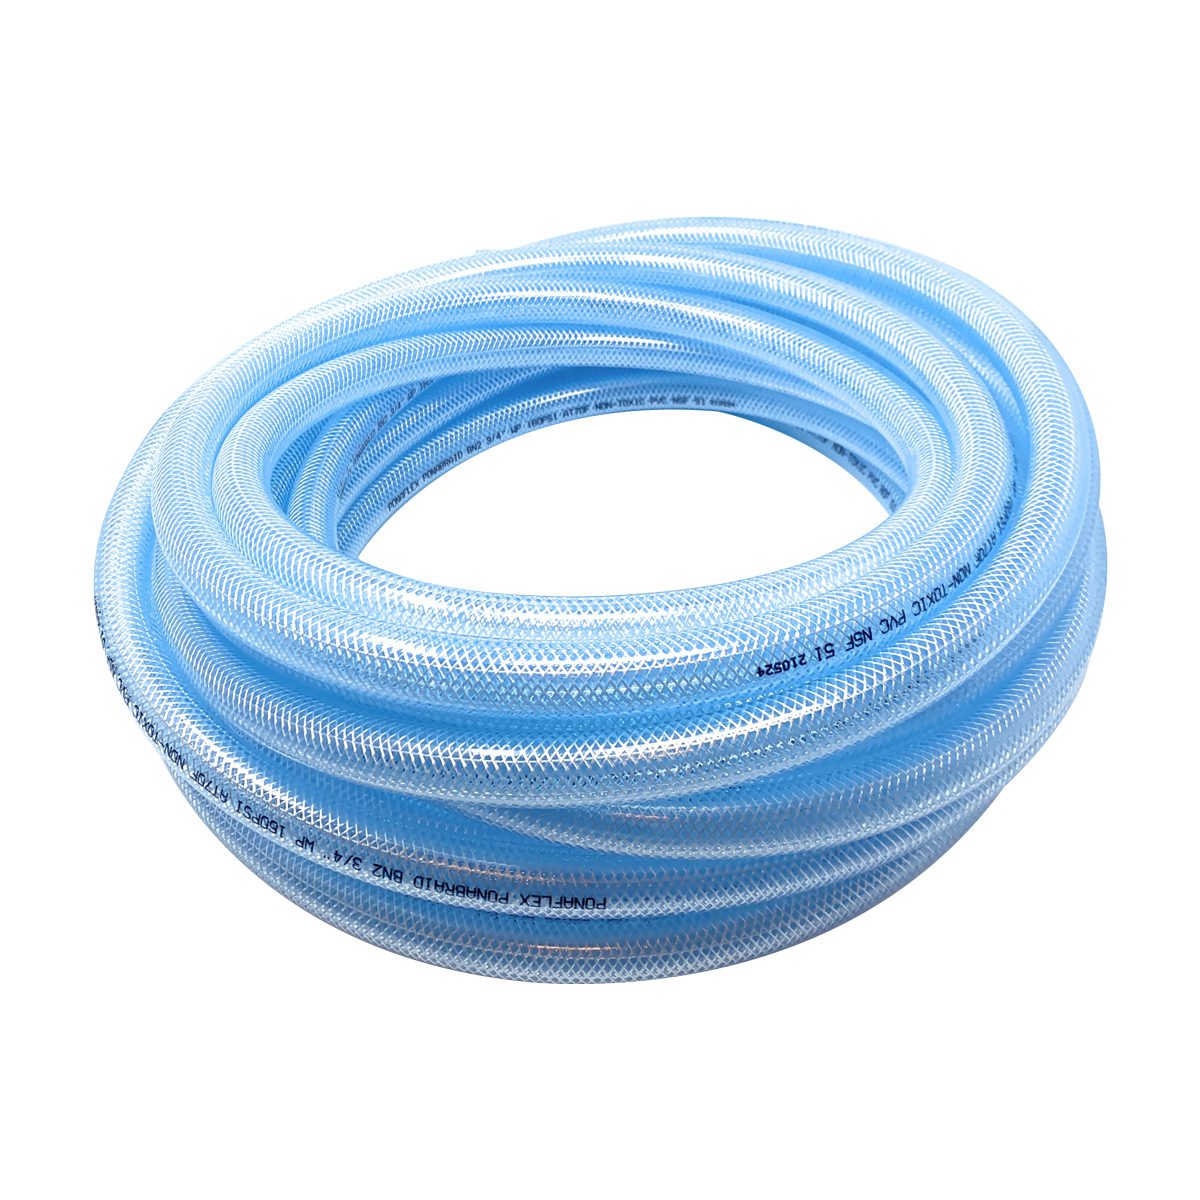 Gloxco Clear Braided PVC Tube, Food Grade Hose, 3/4 ID, 50 Ft Length